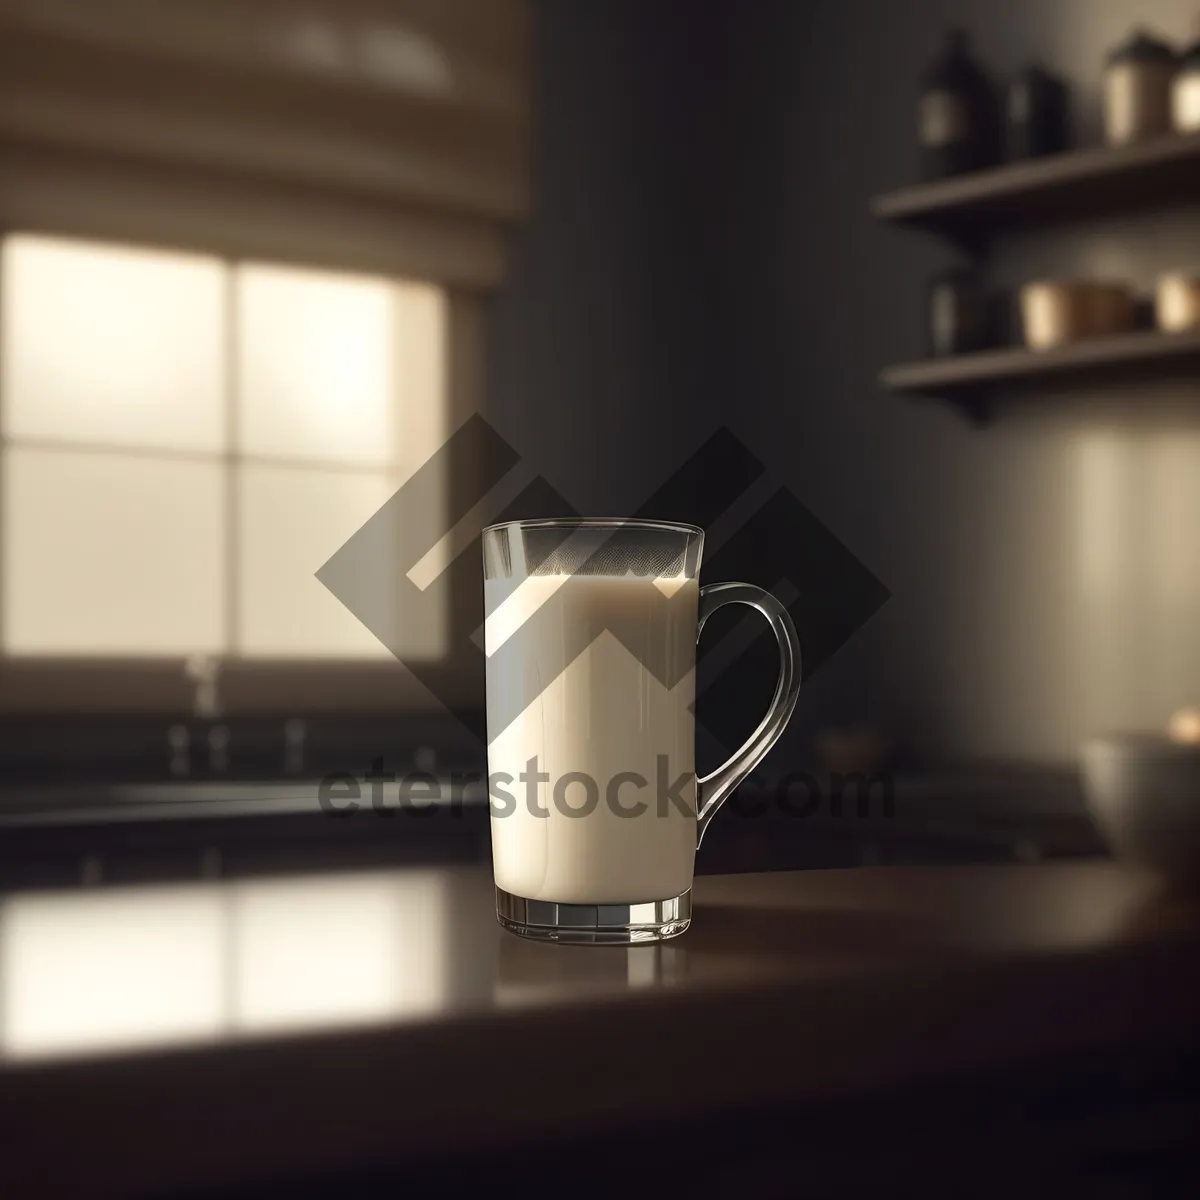 Picture of Morning Brew: Espresso in Elegant Coffee Mug